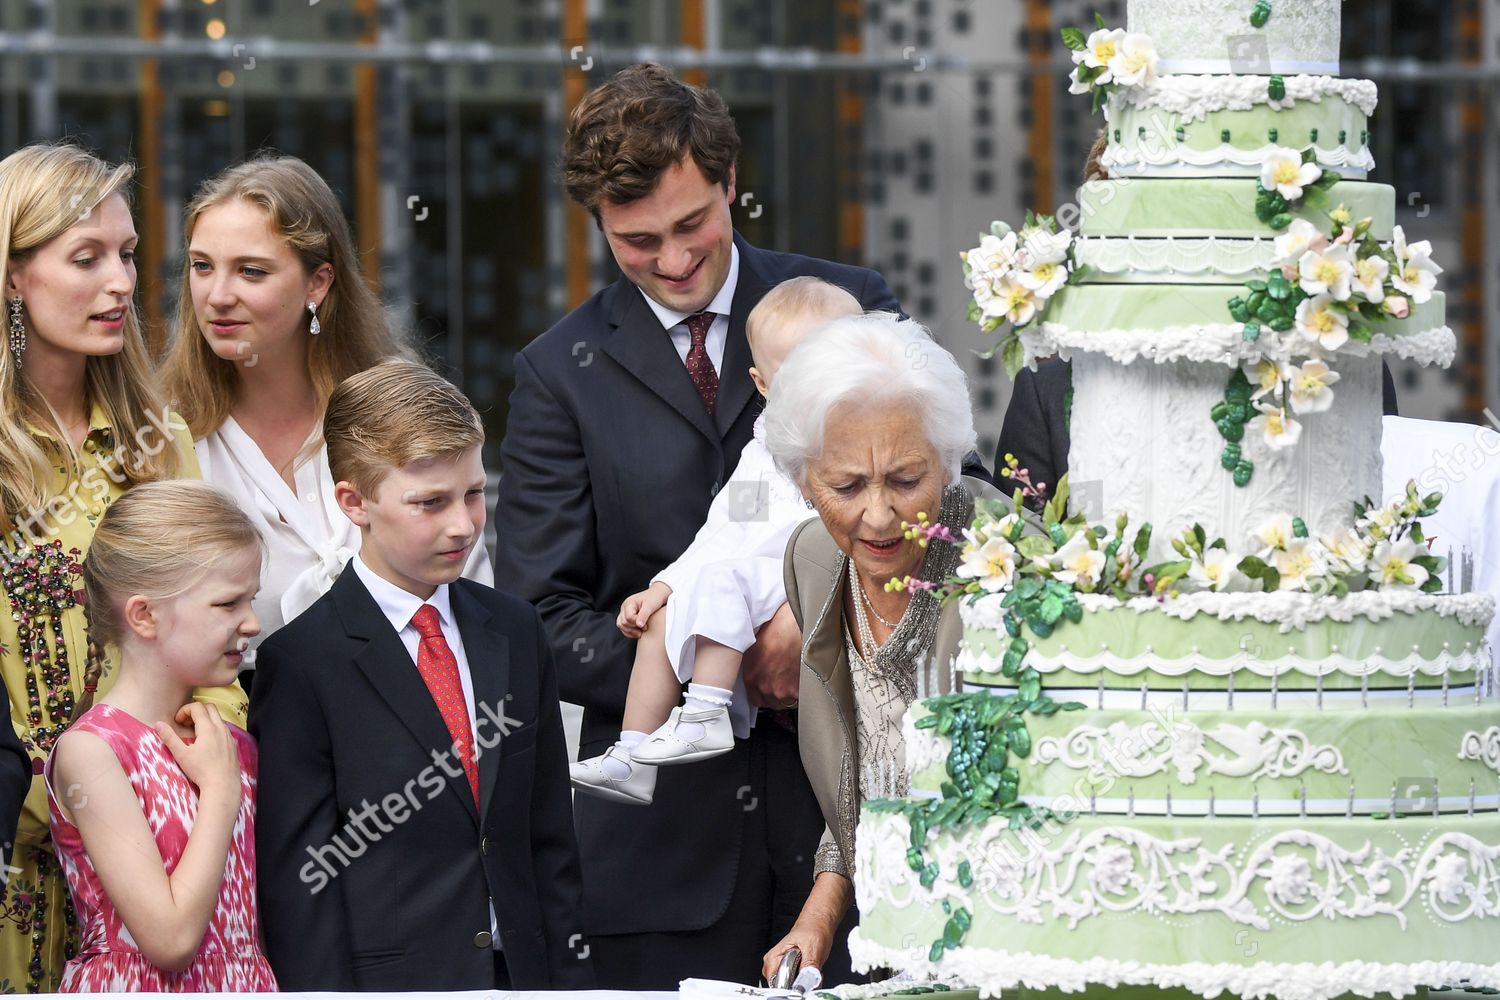 queen-paola-80th-birthday-celebration-brussels-belgium-shutterstock-editorial-8883785ao.jpg